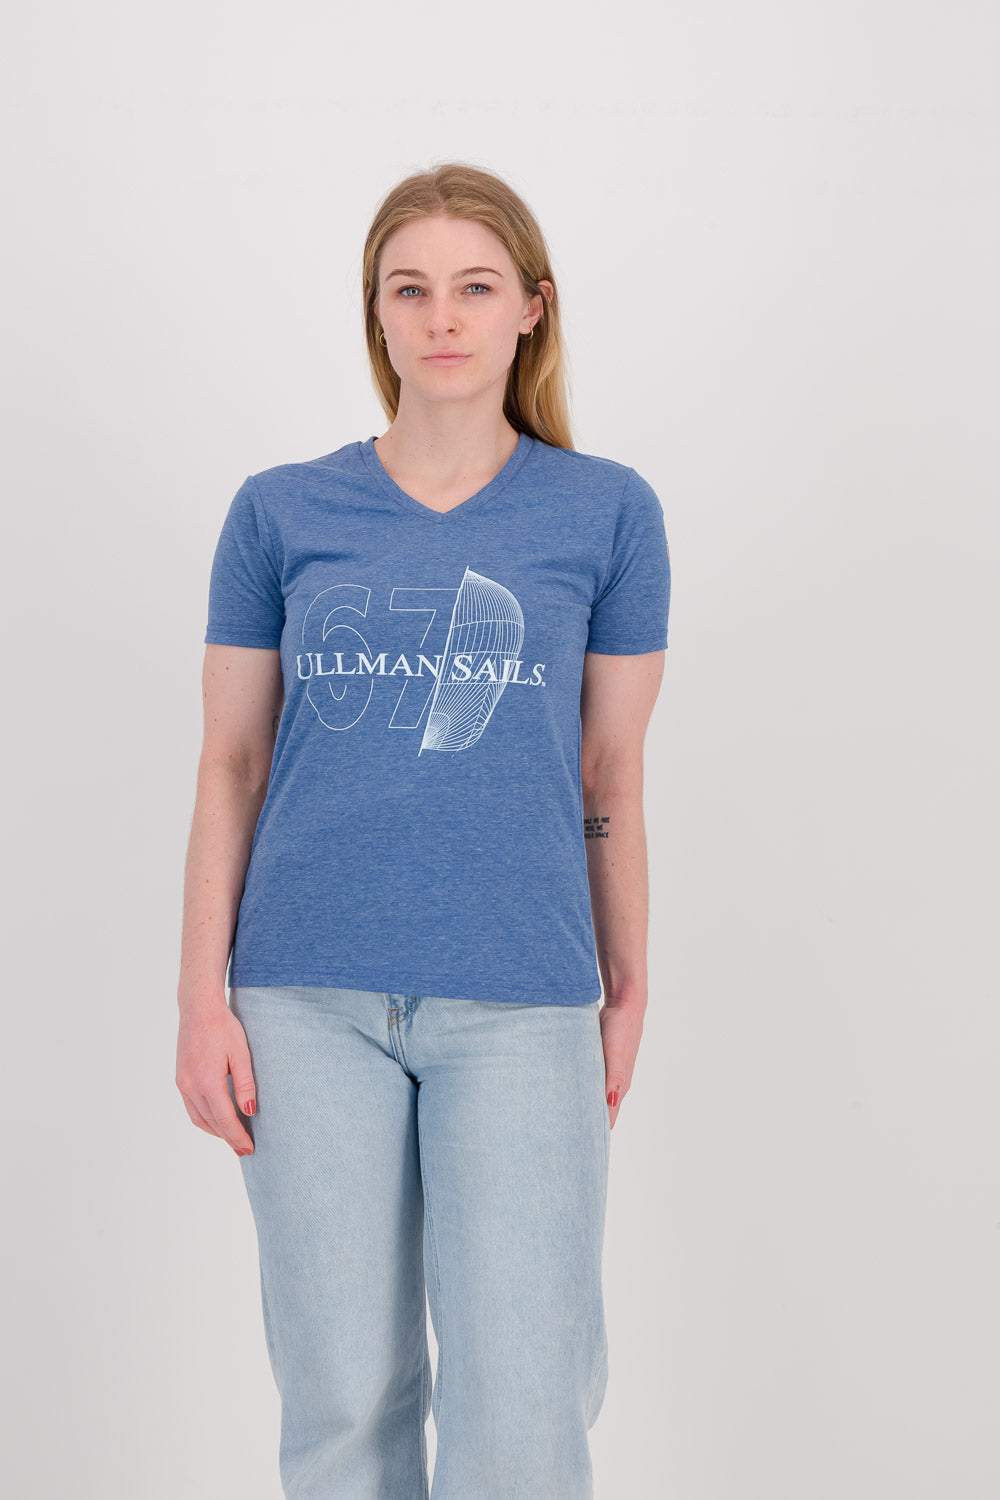    Ullman-Sails-Blue-Tshirt-Front-Ladies